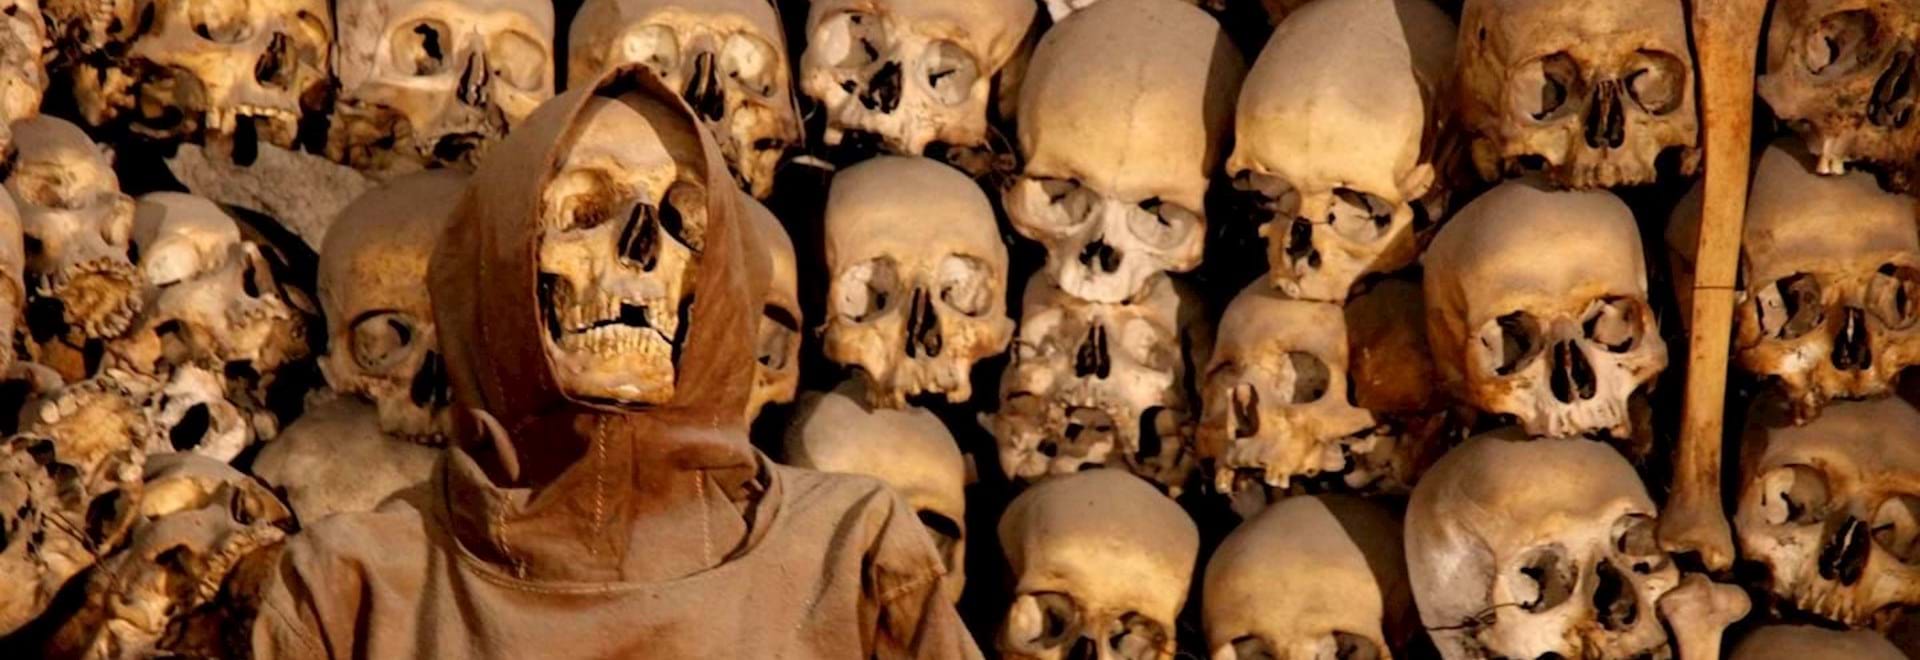 Skulls in the Roman Catacombs in Italy